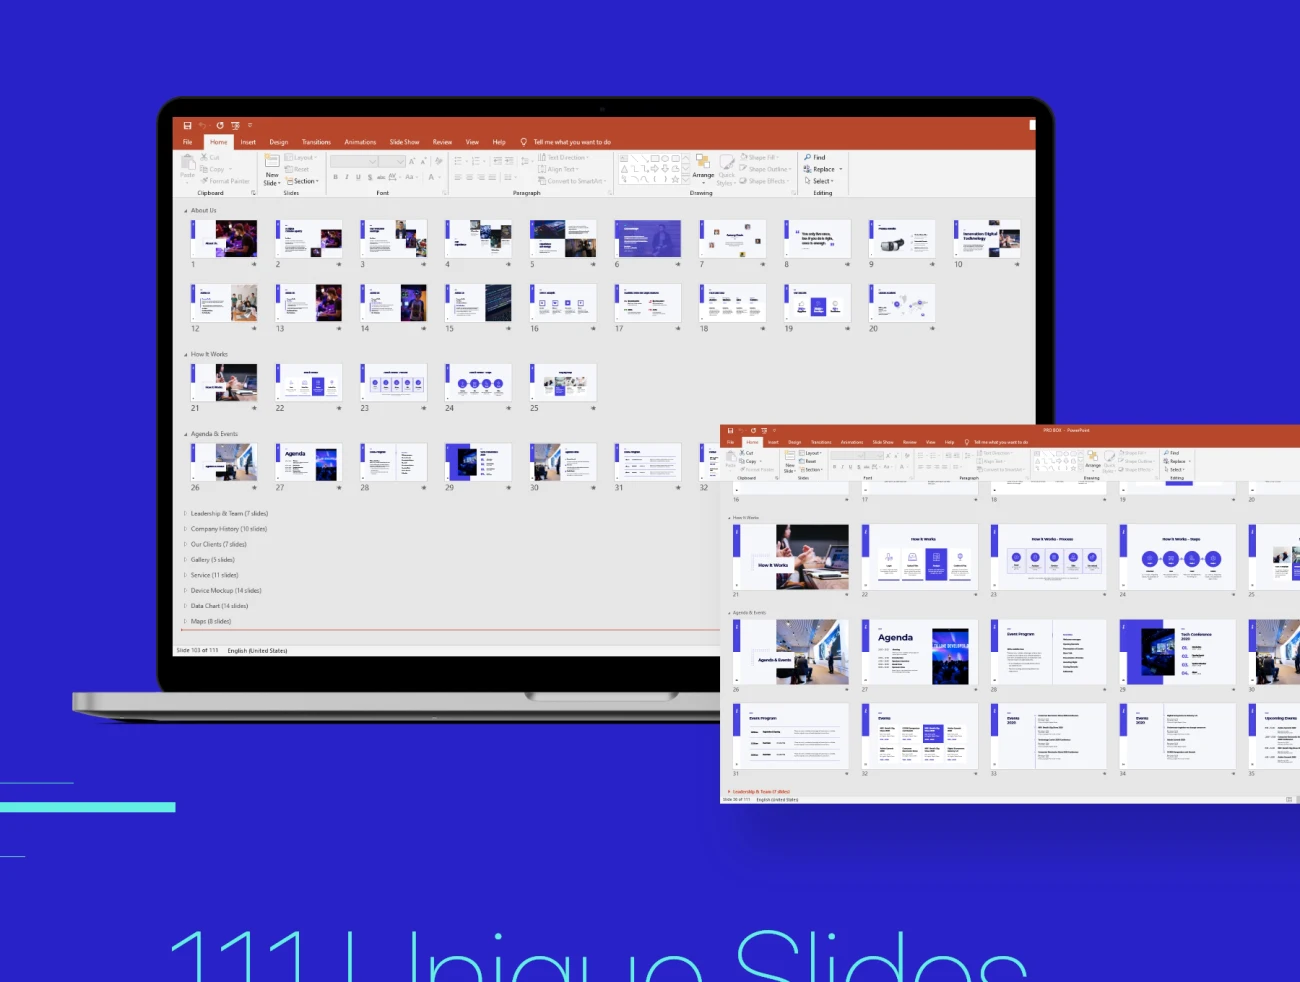 Pro Presentation - Animated Google Slides Template 专业演示-谷歌动画幻灯片模板-PPT素材、专题页面、素材专辑-到位啦UI